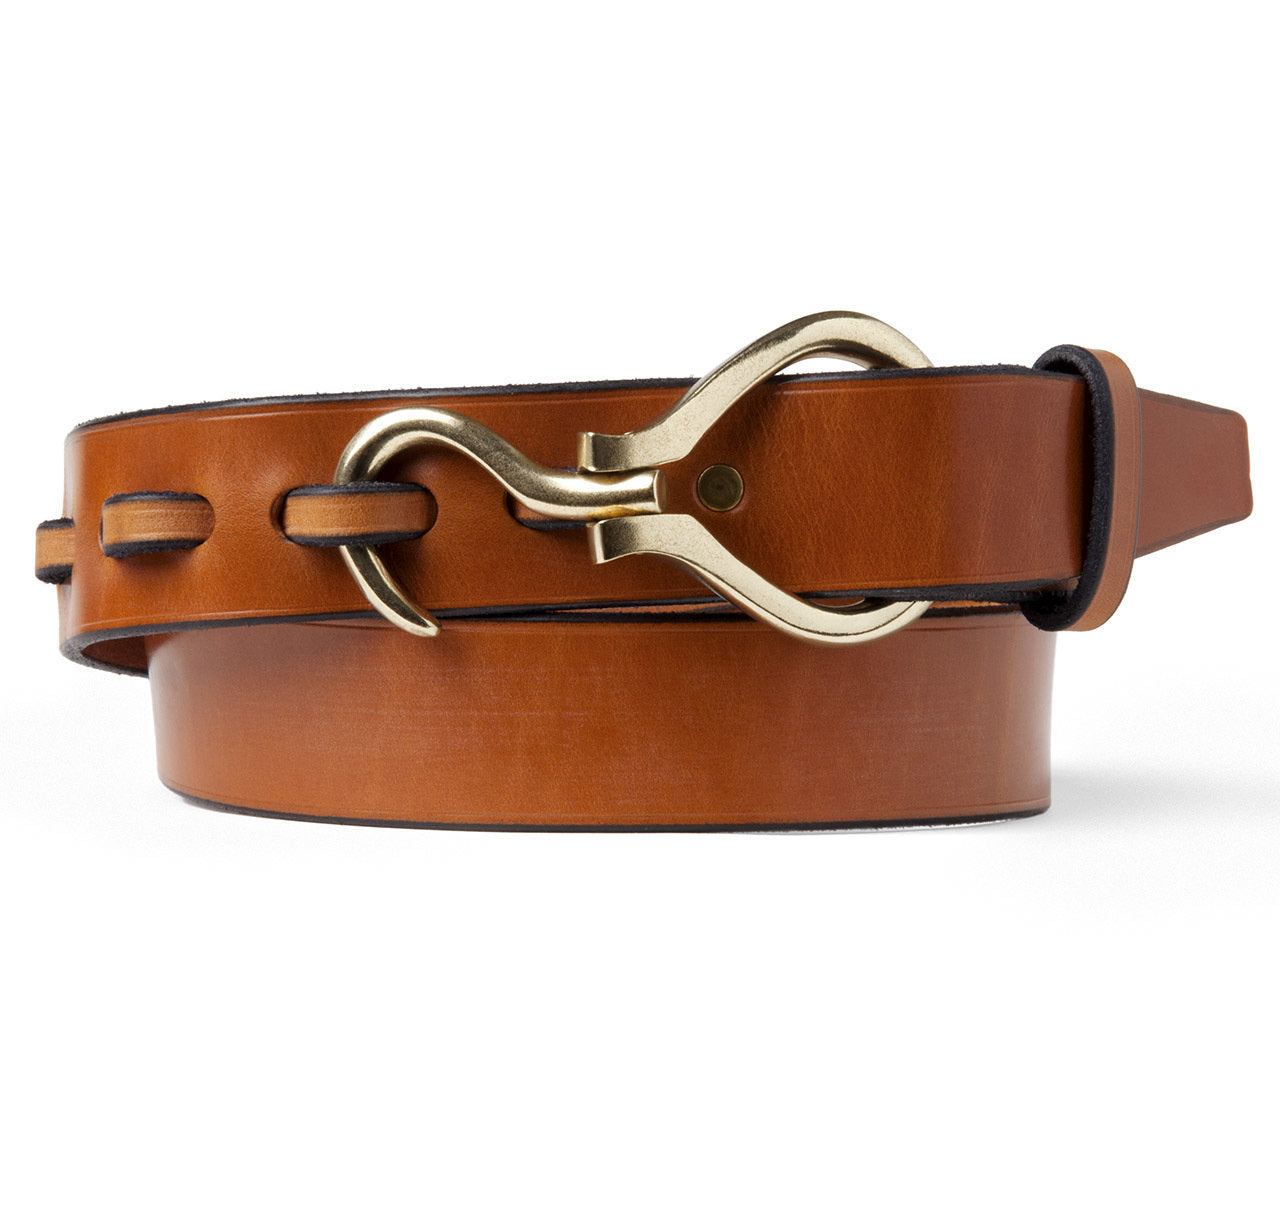 Large Hoof Pick Belt in Cognac